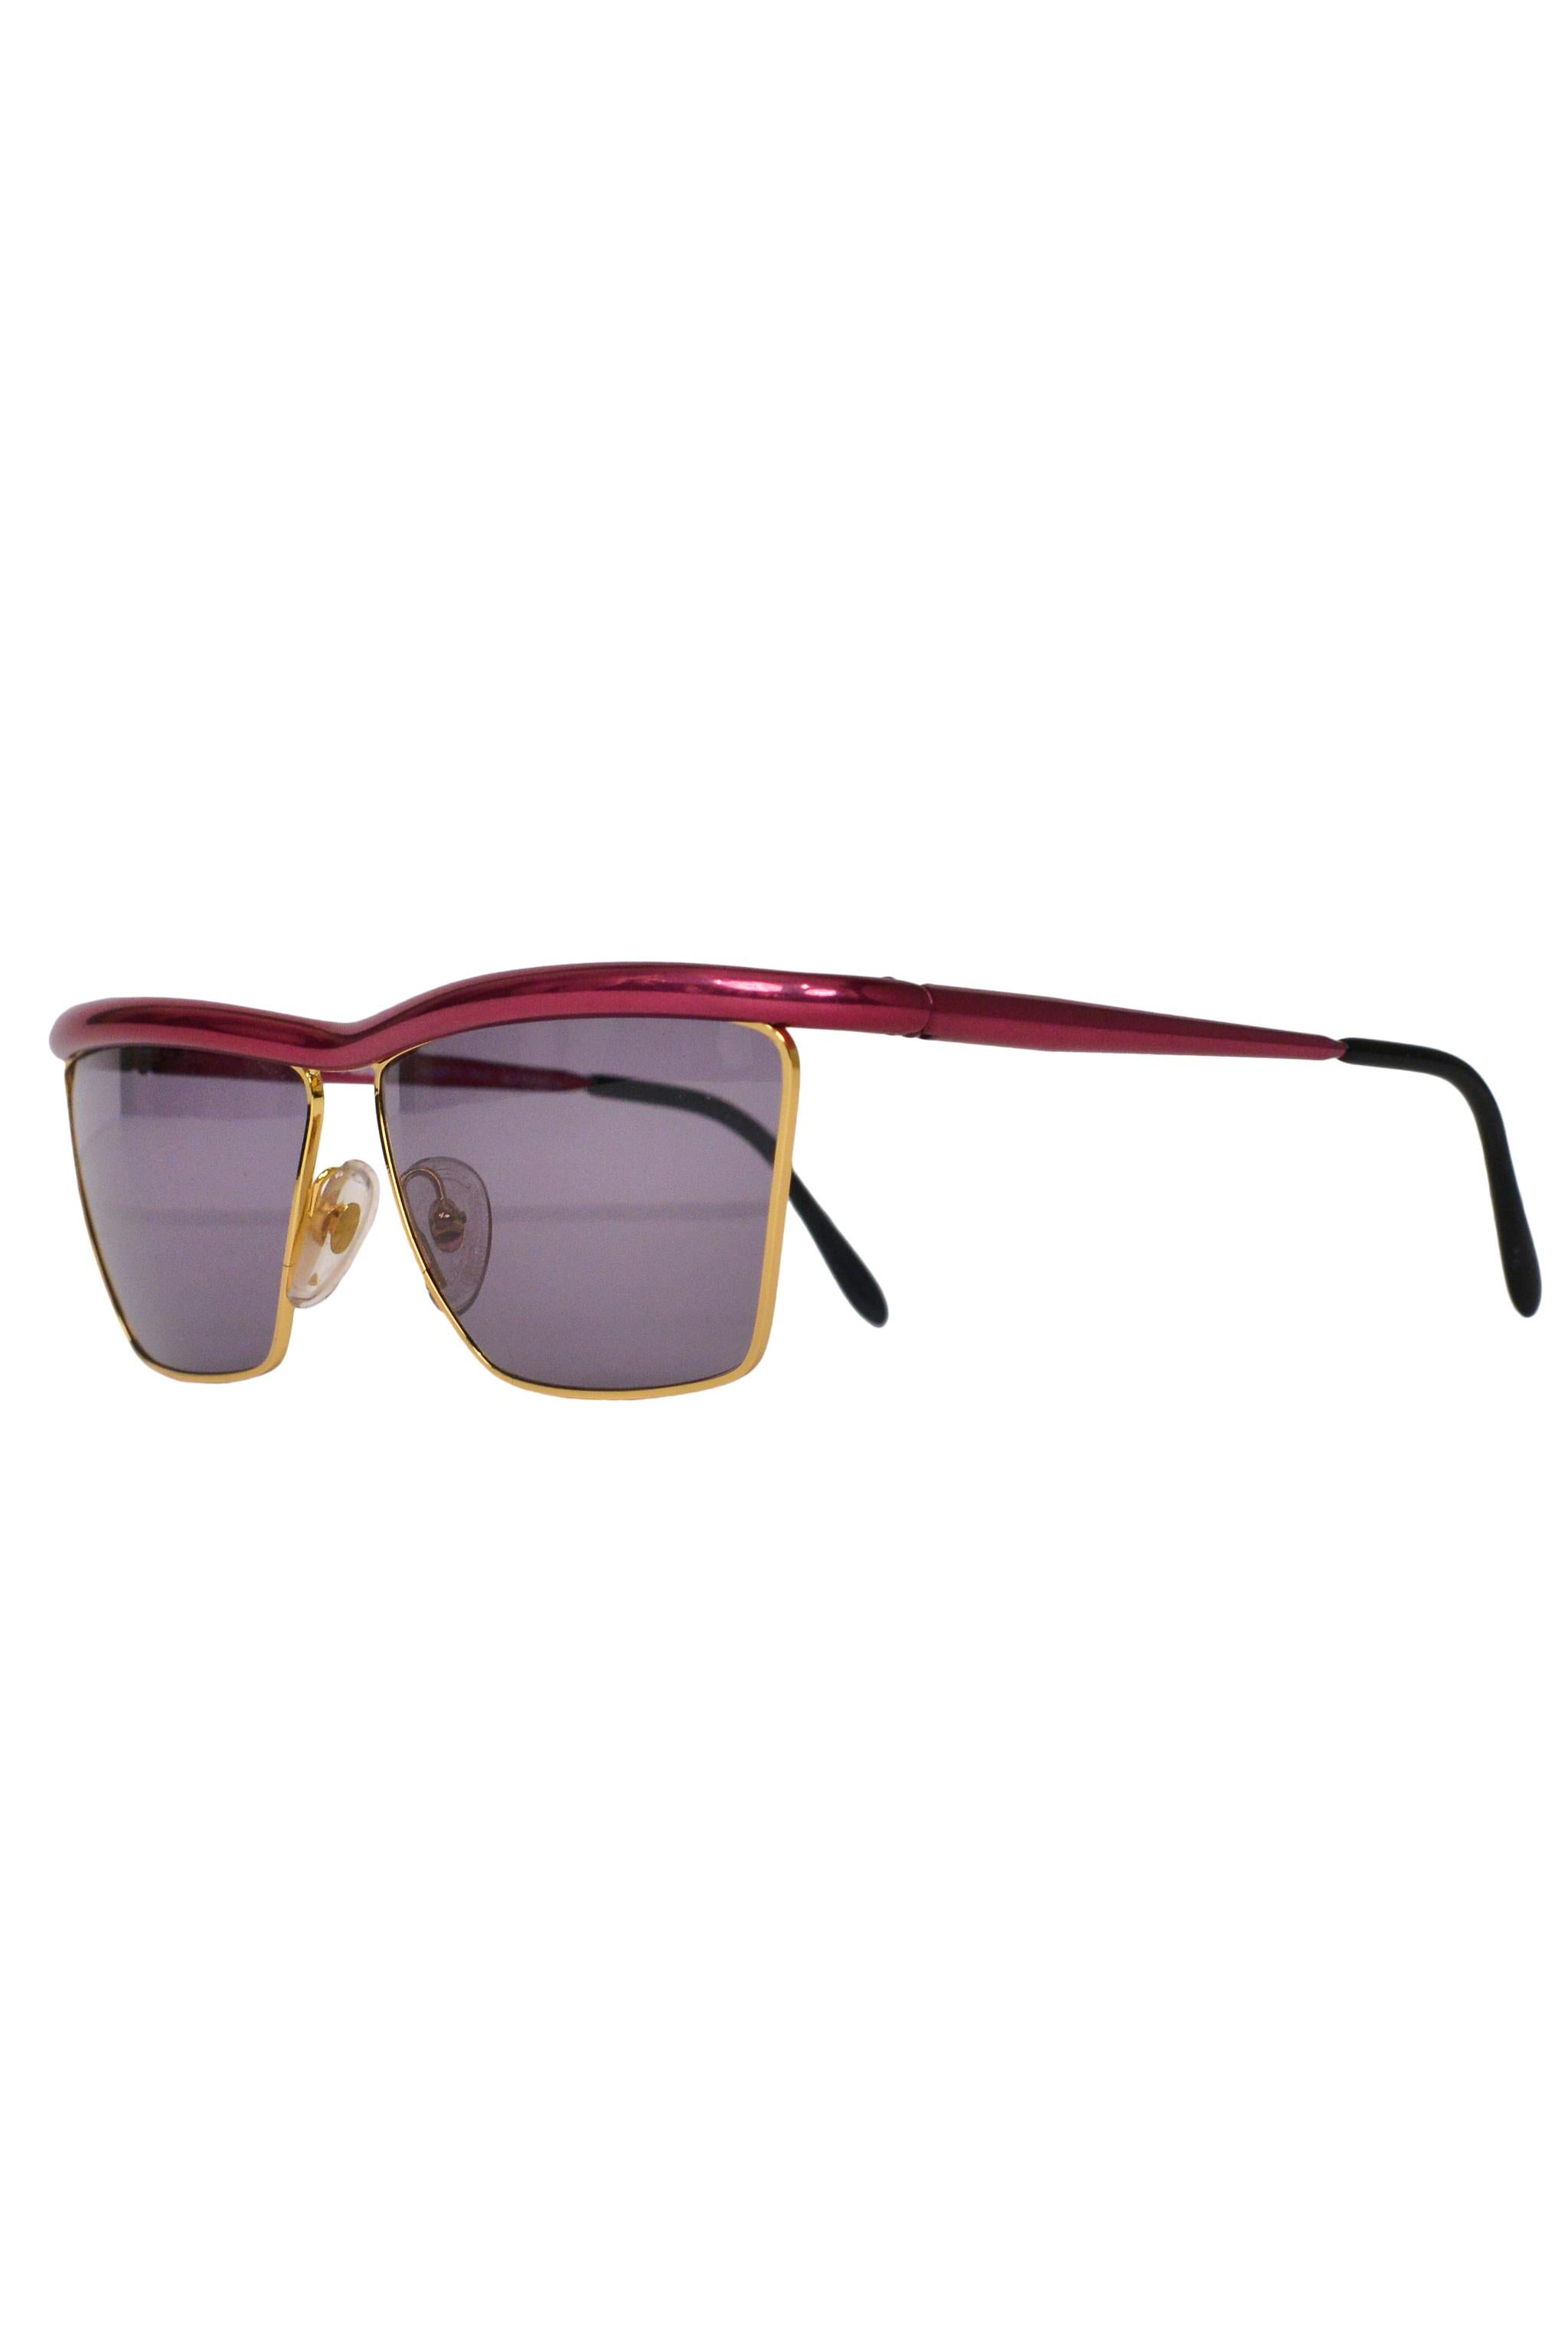 pink metallic sunglasses